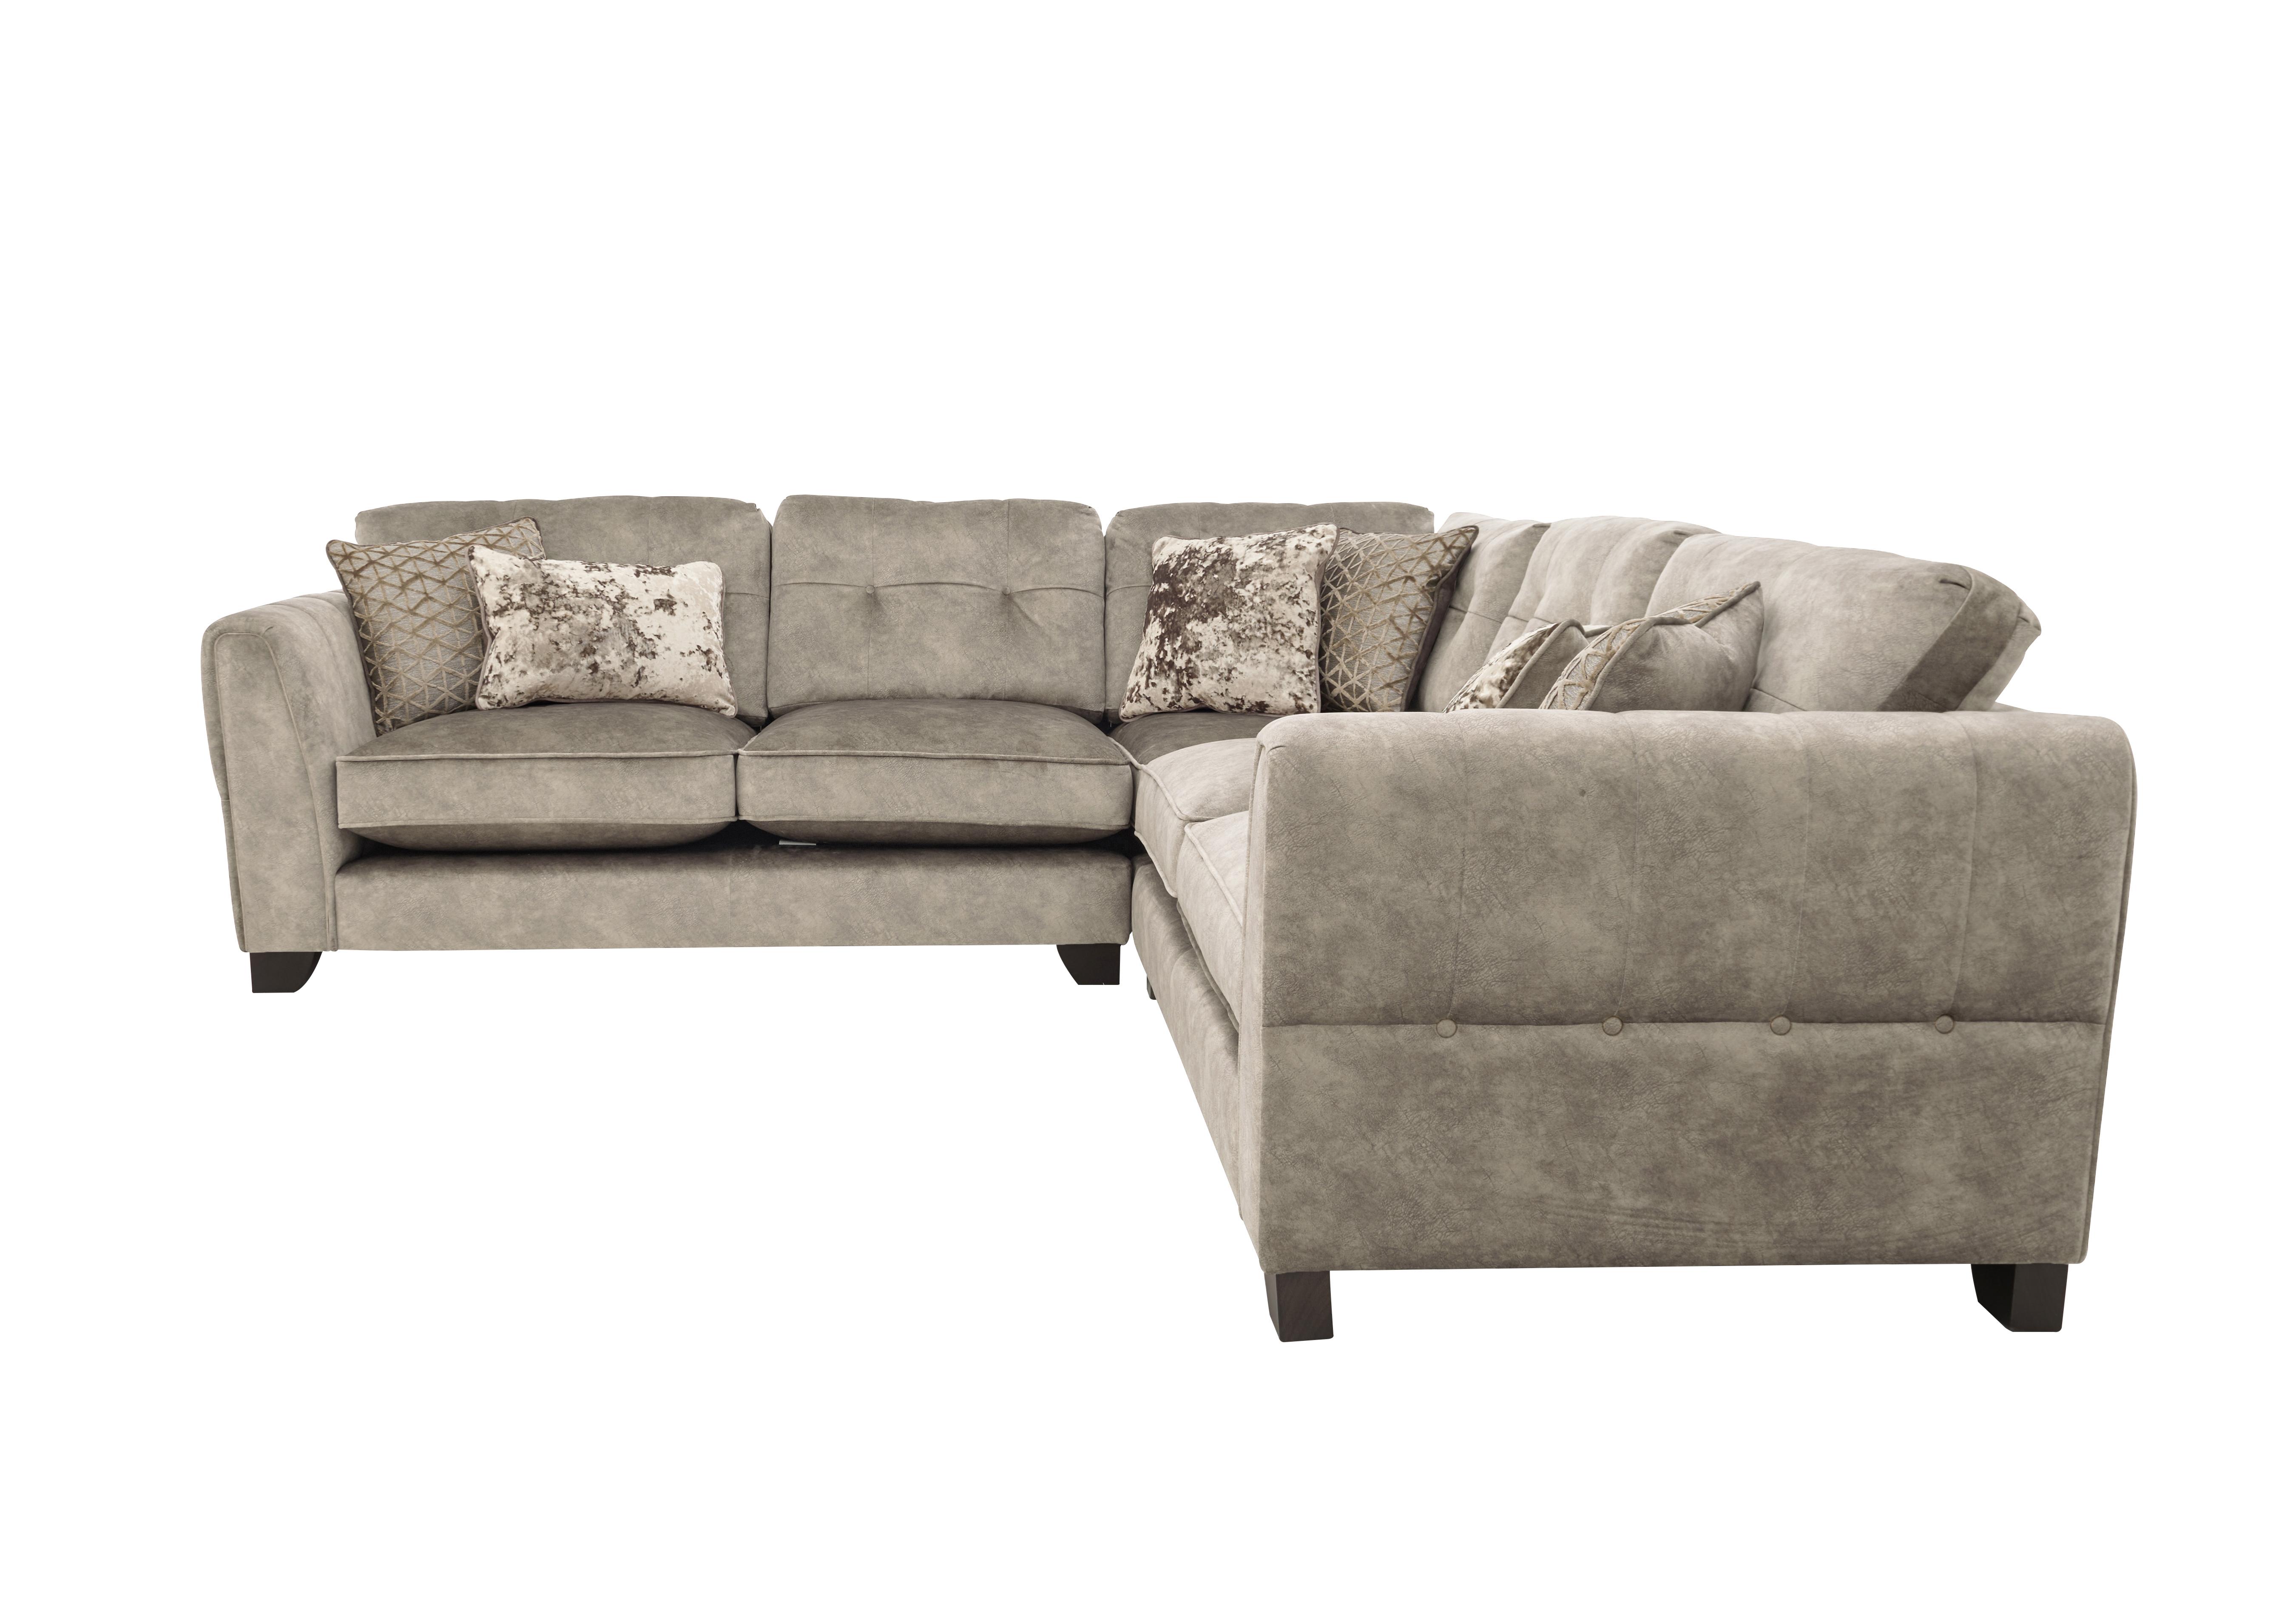 Ariana Large Fabric Classic Back Corner Sofa in Dapple Oyster No Insert on Furniture Village